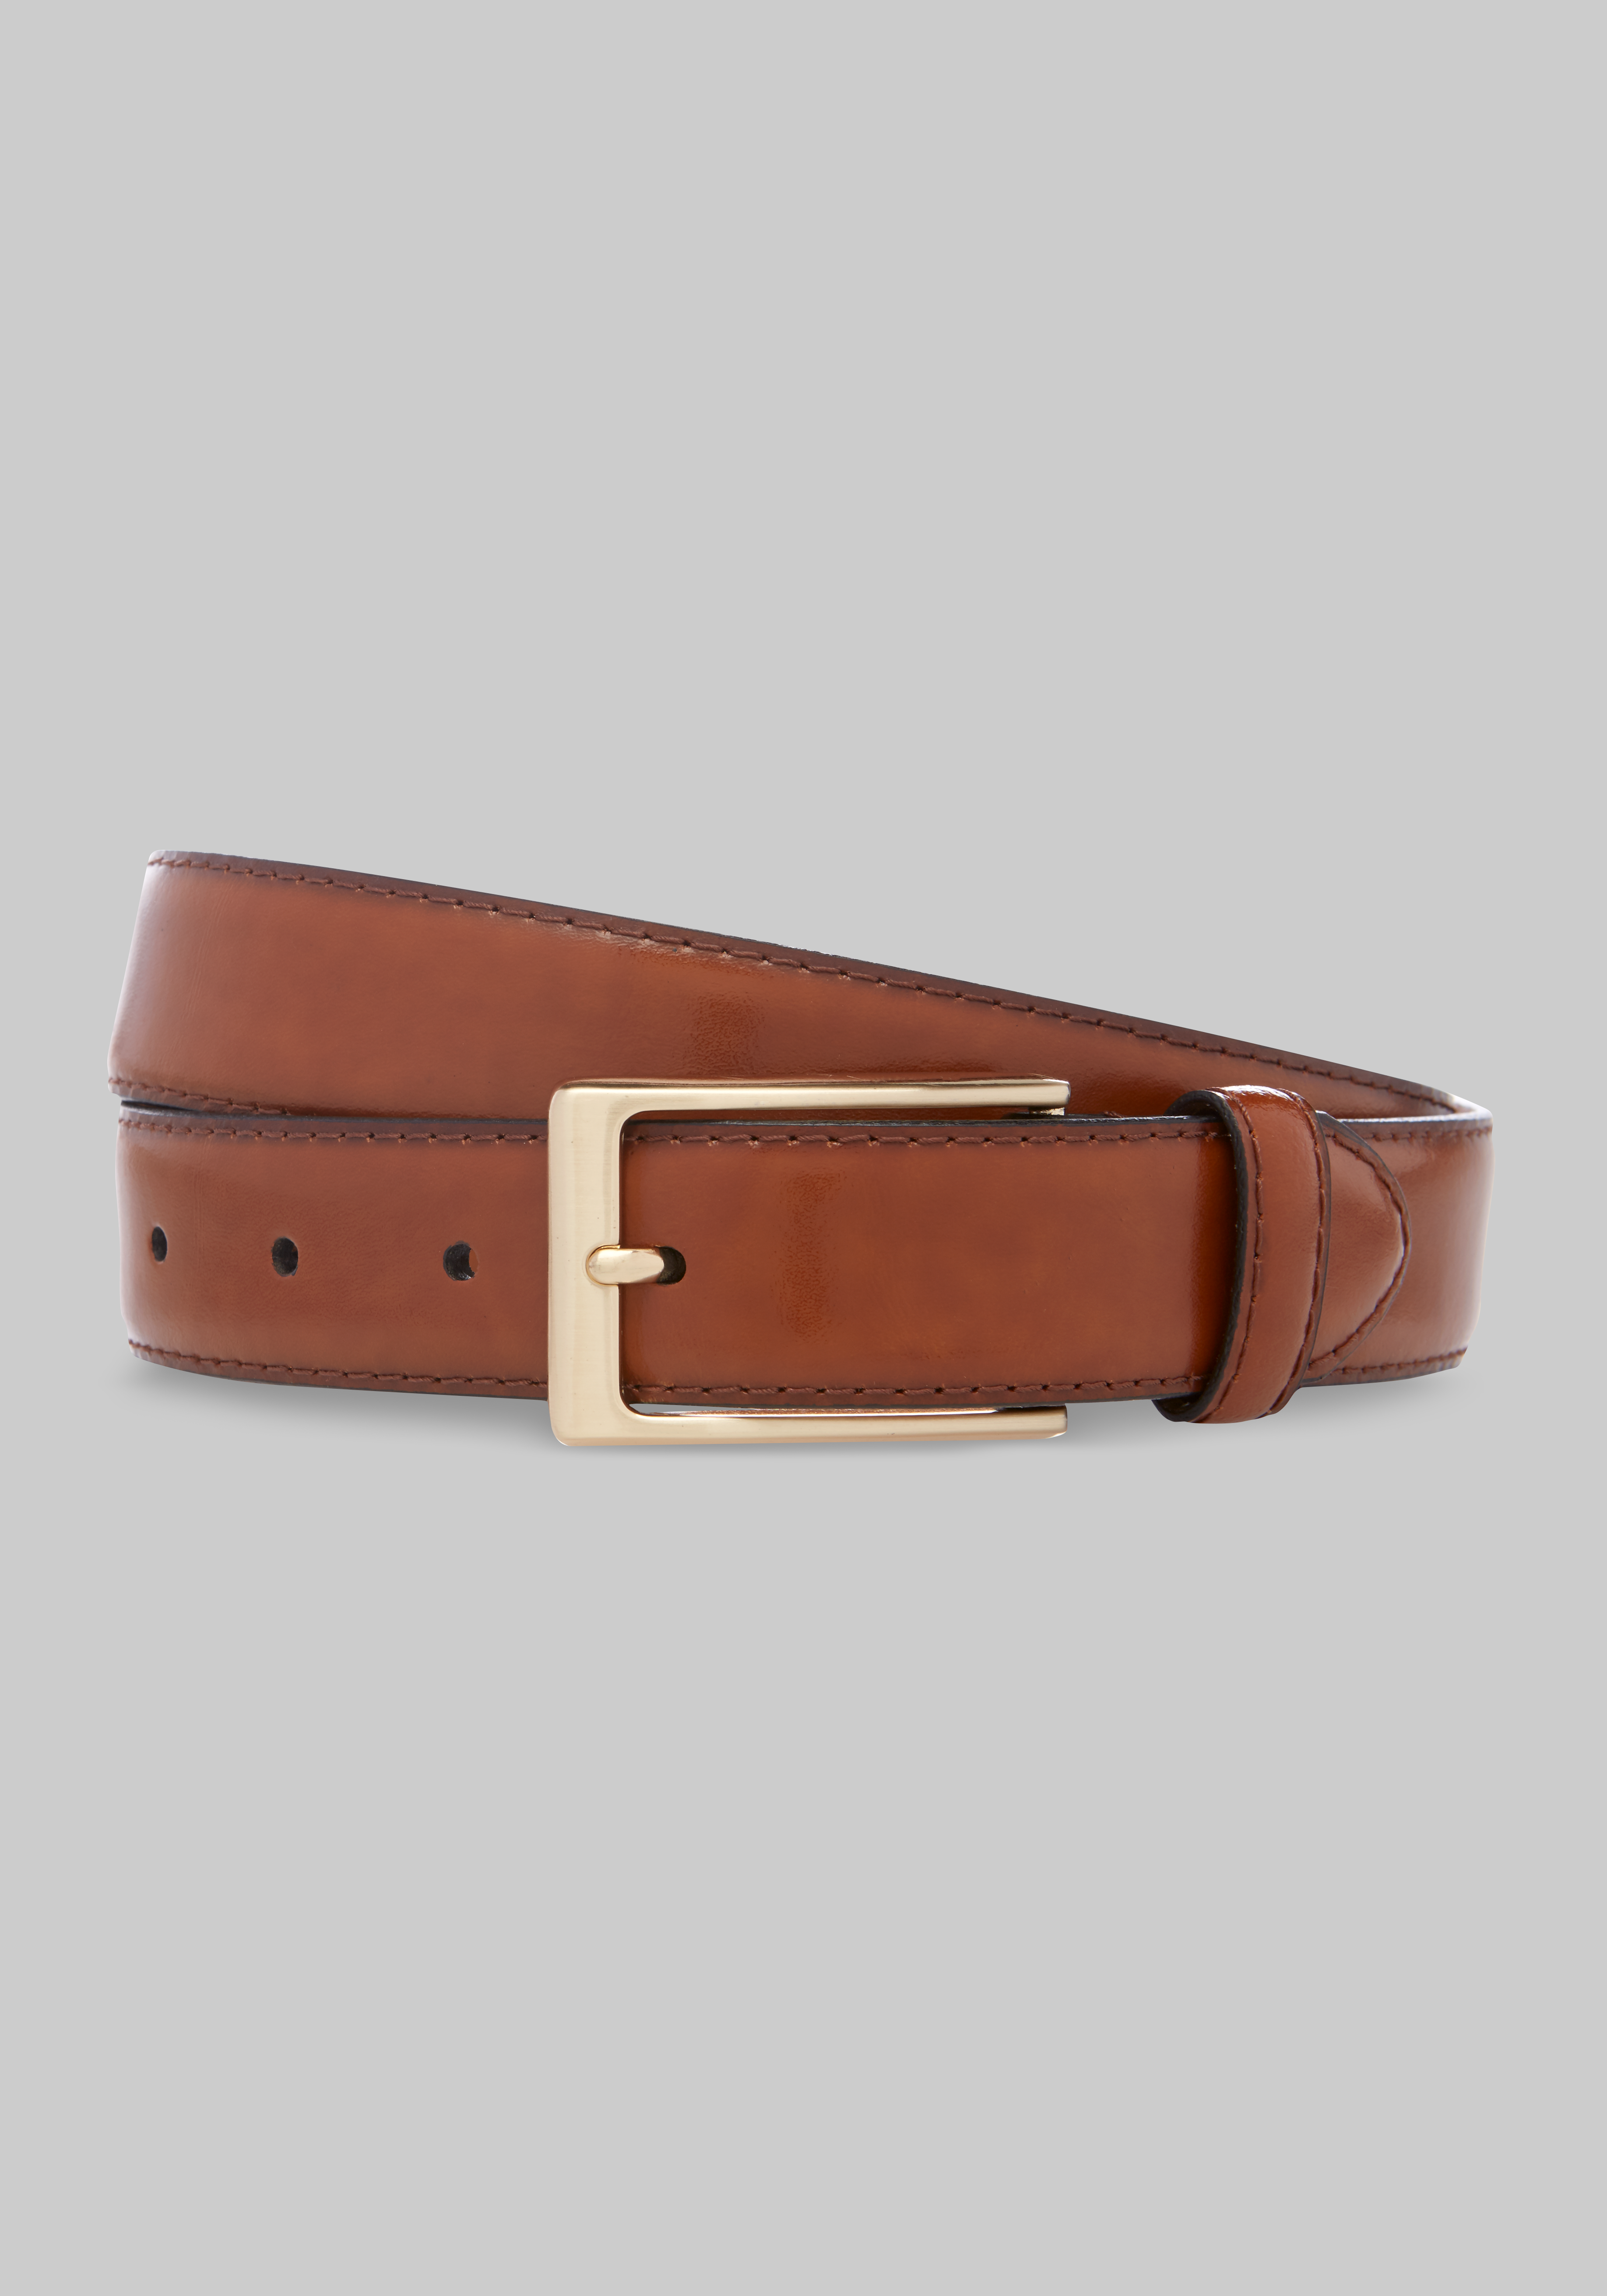 Joseph Abboud Woven Belt, All Sale